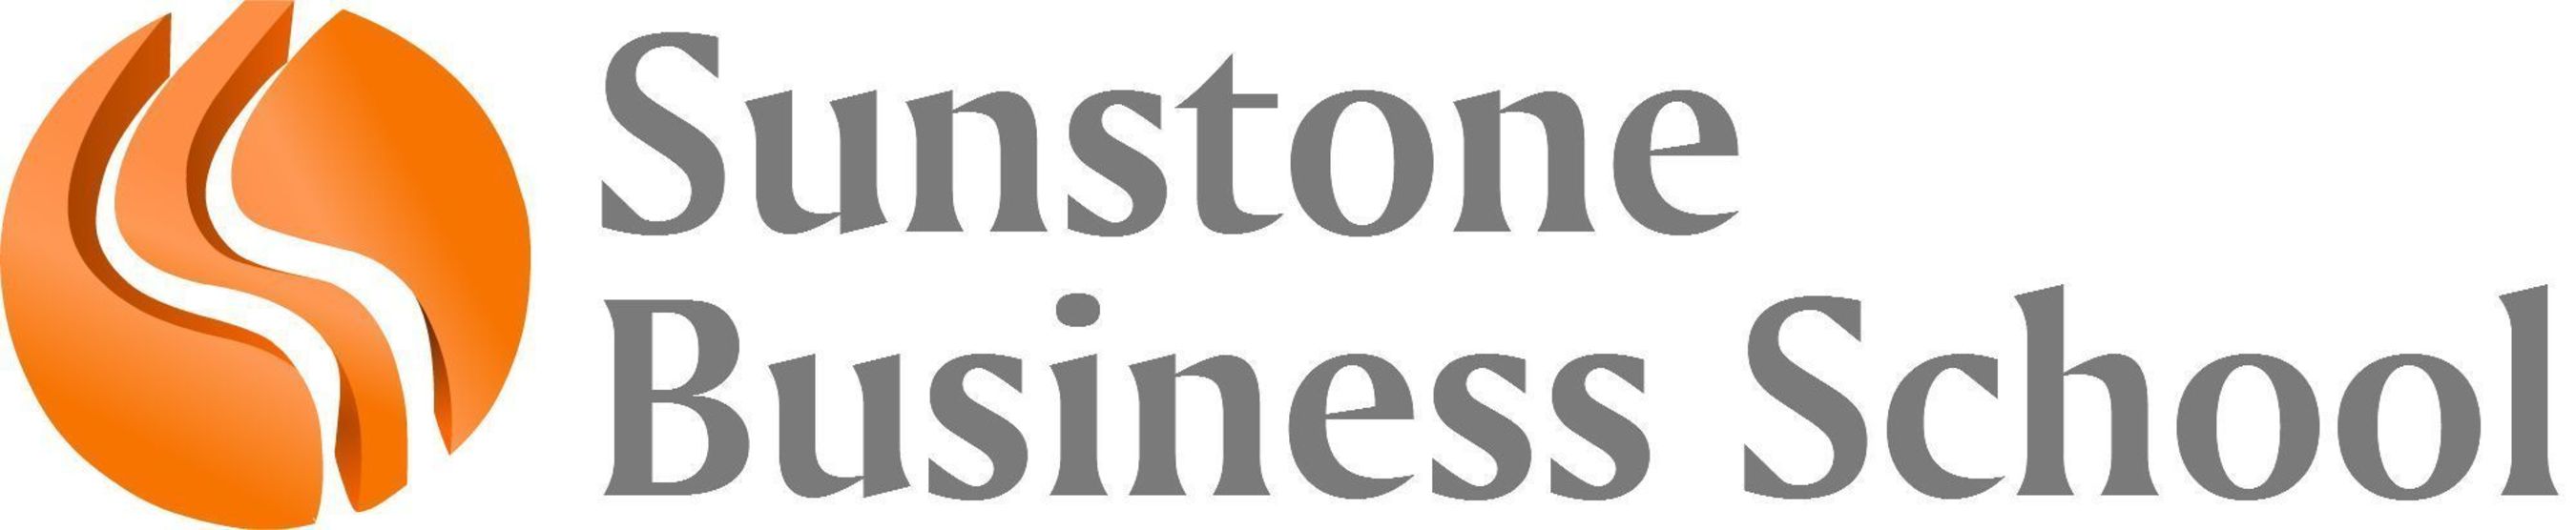 Sunstone Business School Logo (PRNewsFoto/Sunstone Business School)